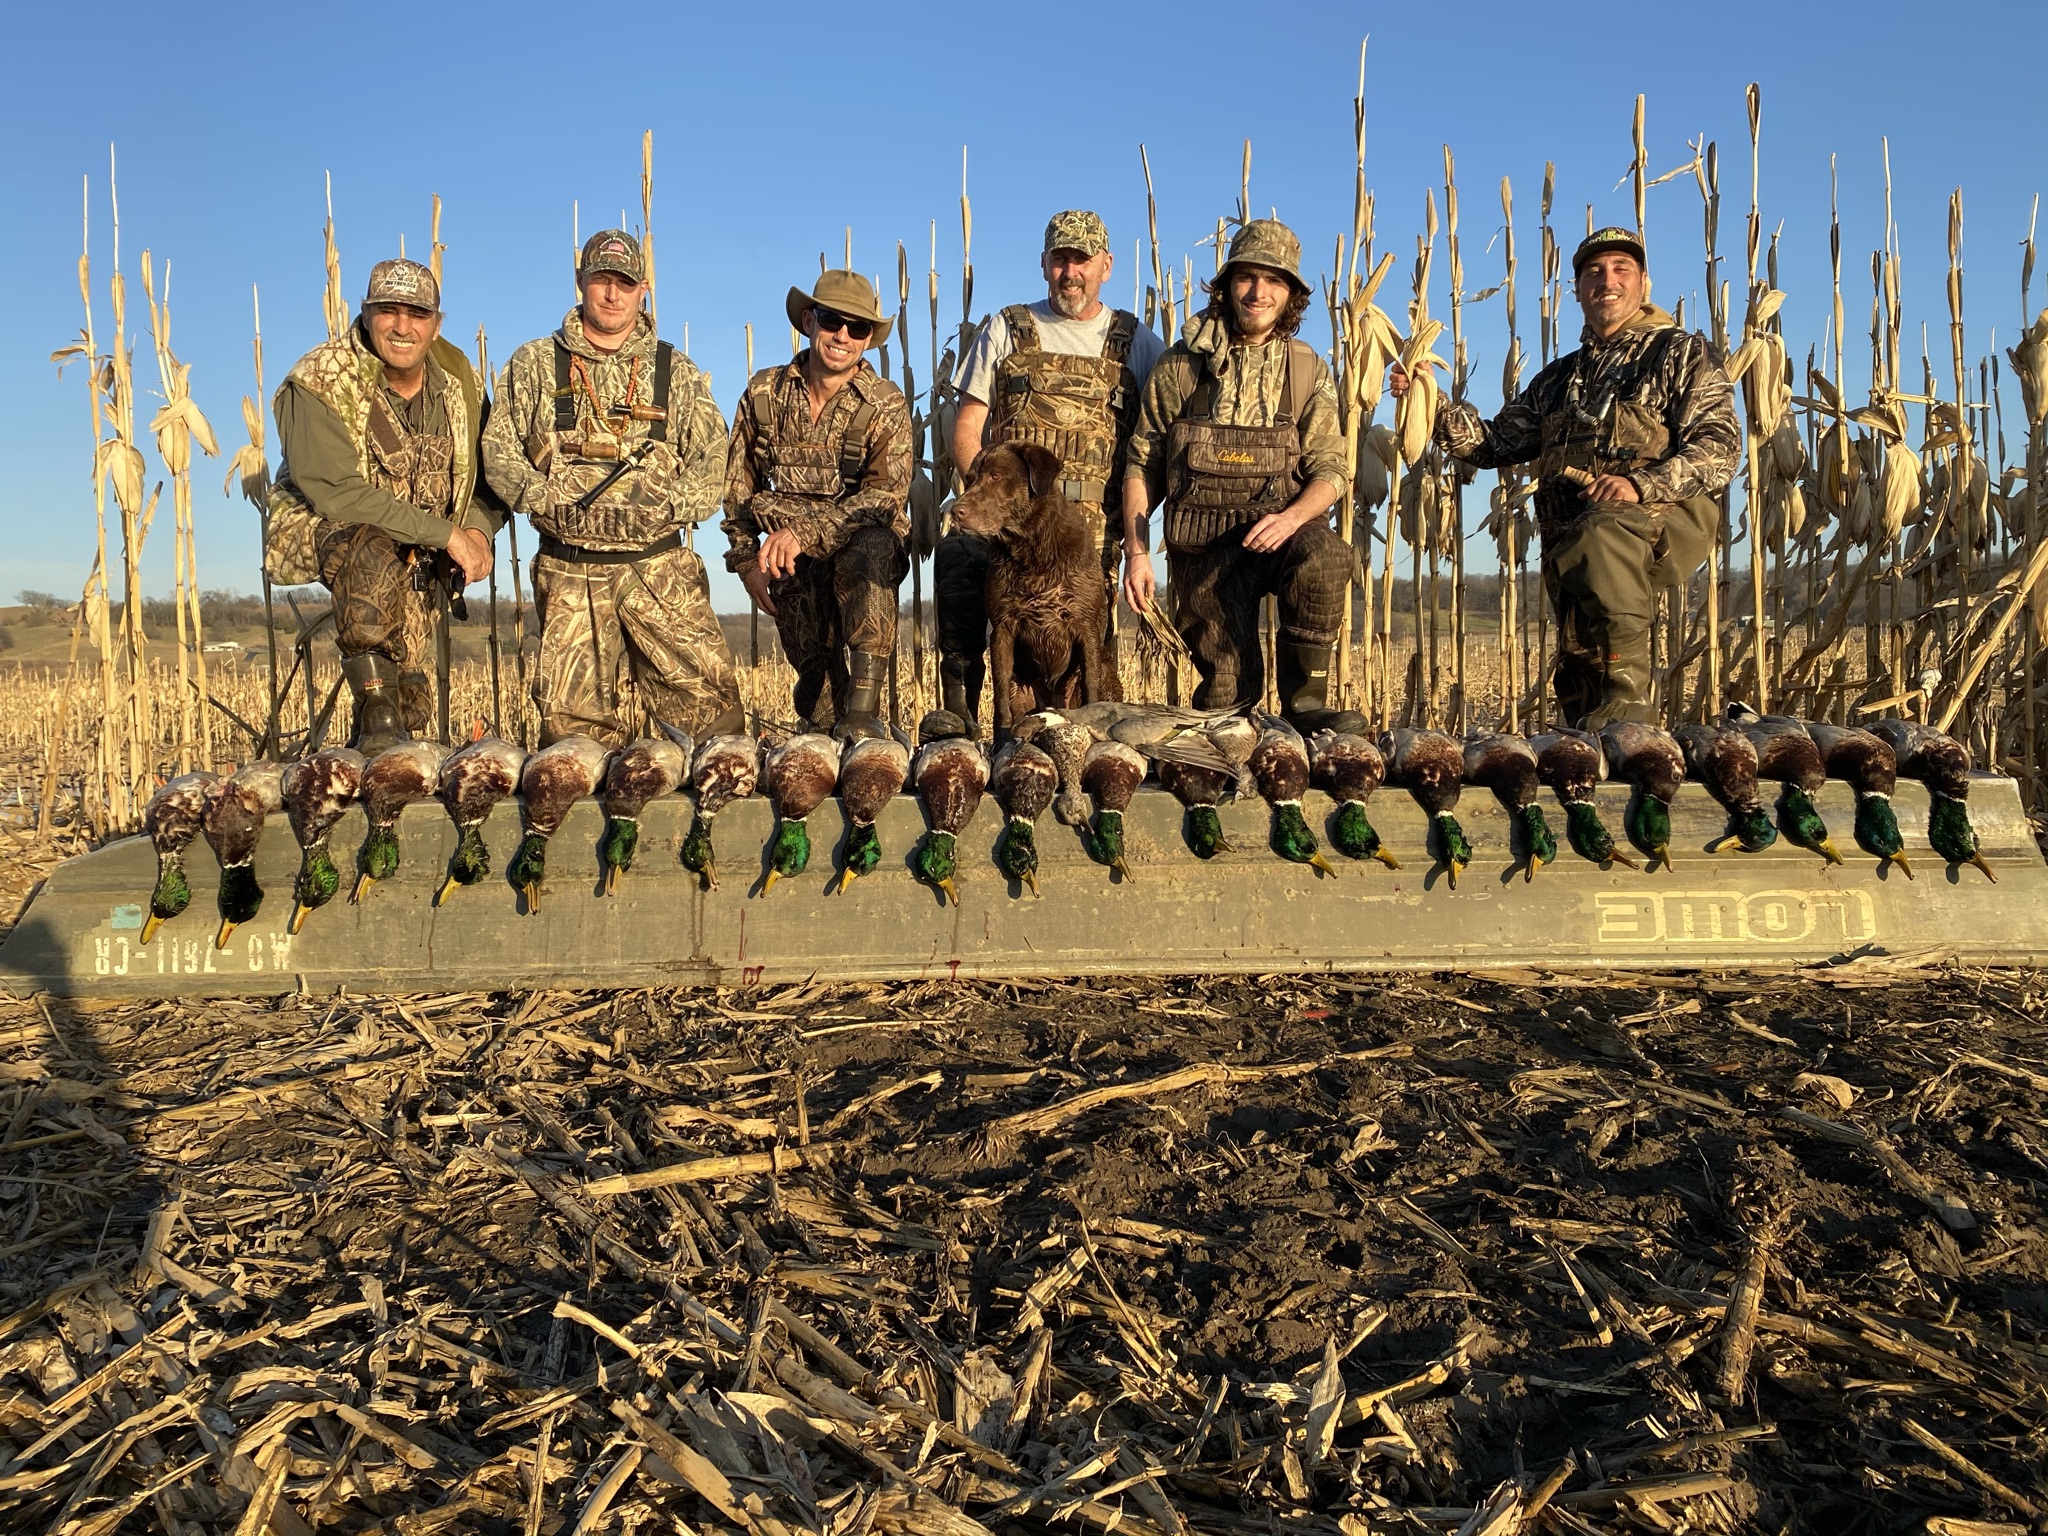 Squaw Creek Hunt Club - Guide Service - Guided Duck Hunts in Northwest Missouri - 855-473-2875